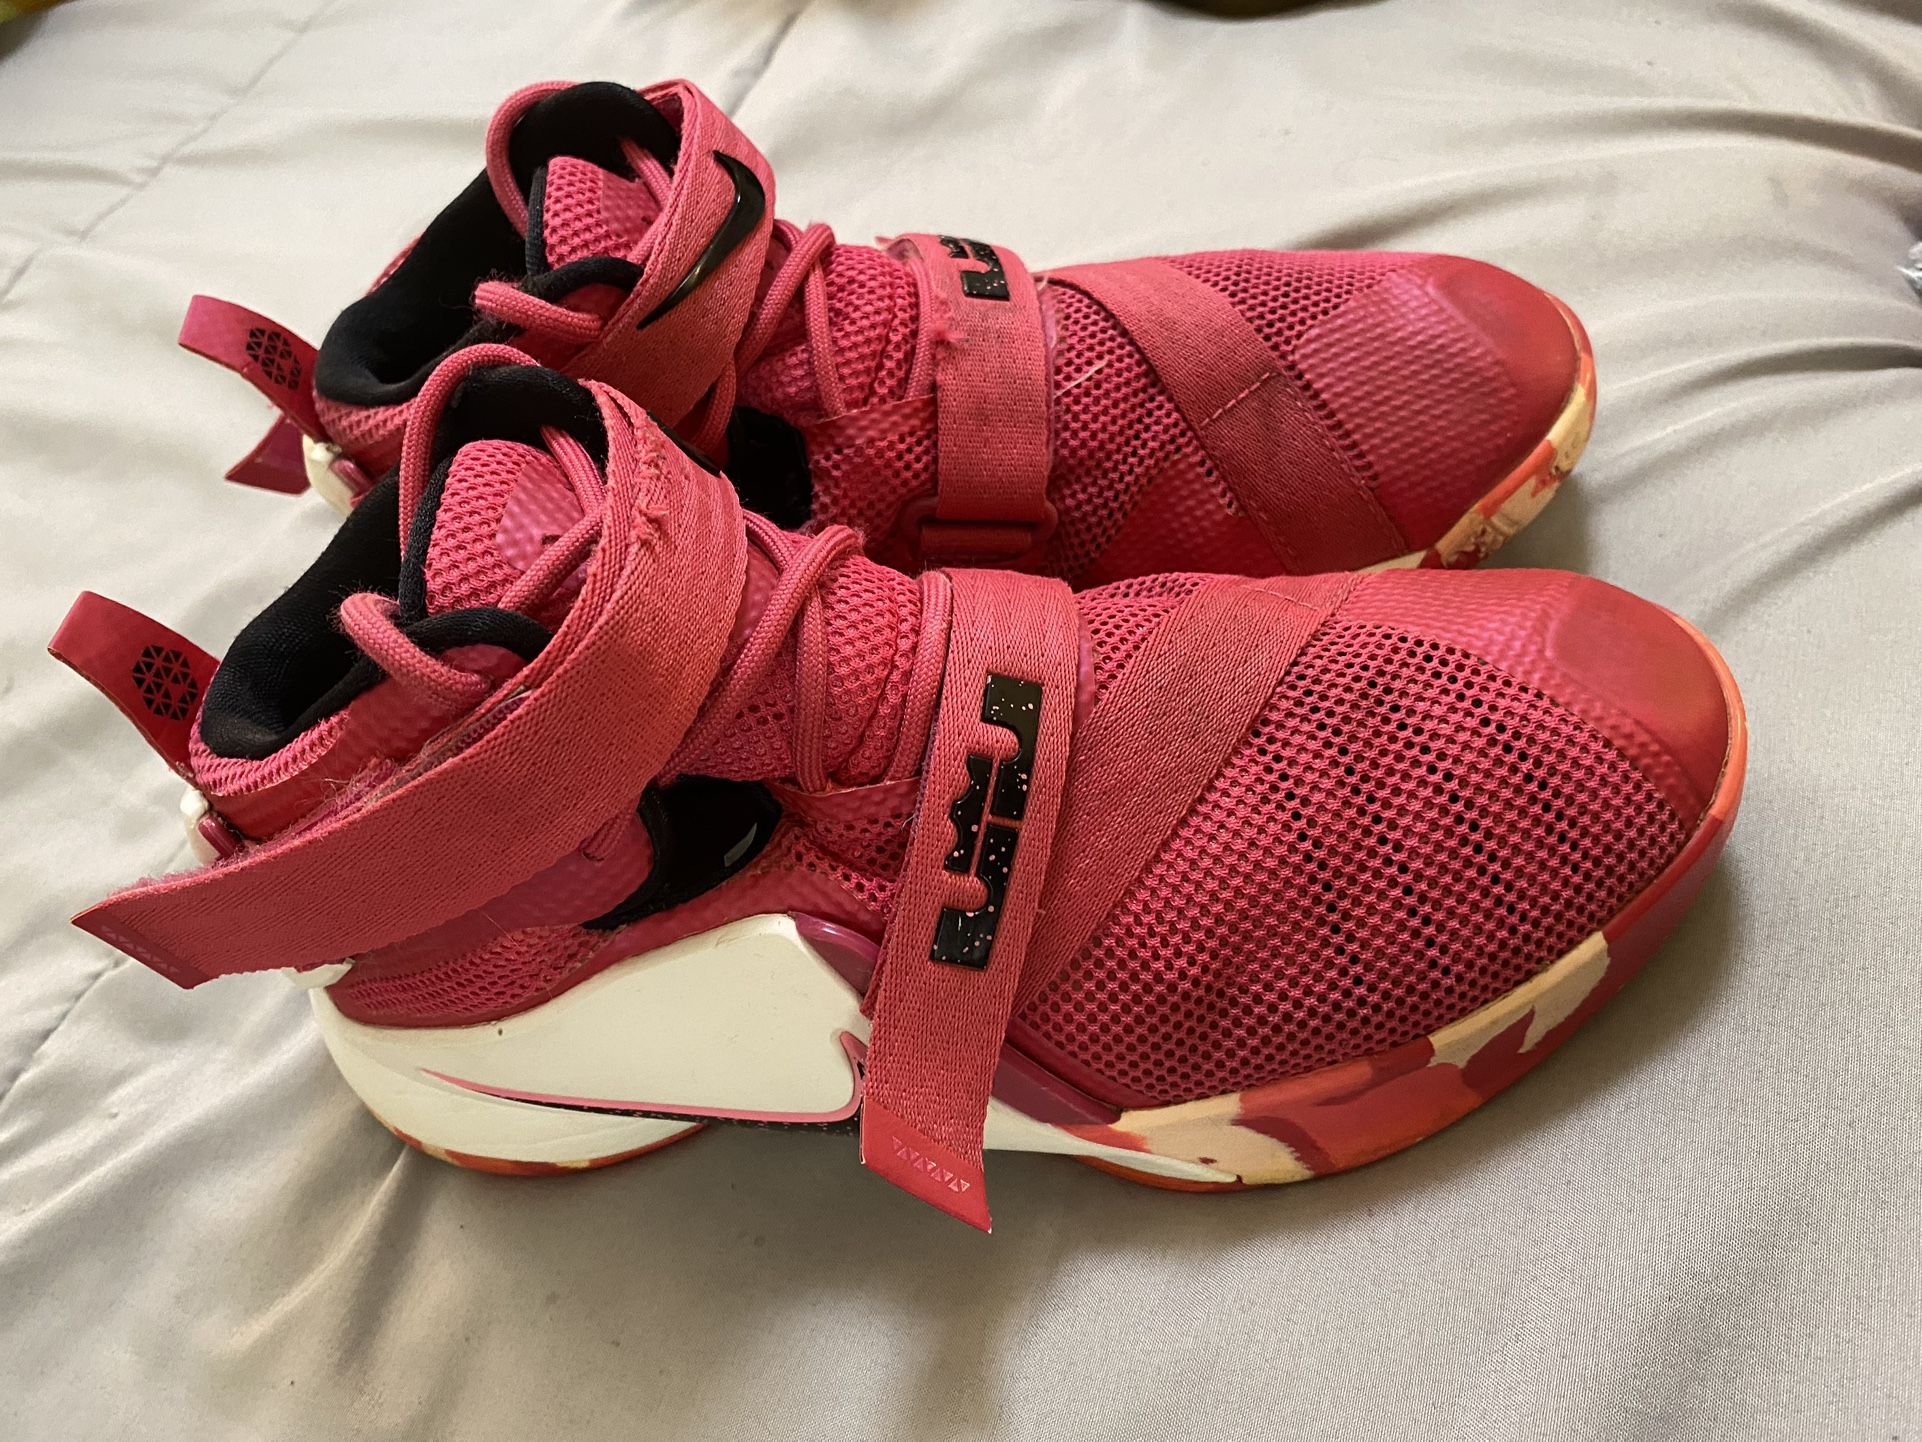 Nike Lebron Soldier IX “Think Pink” size 5y